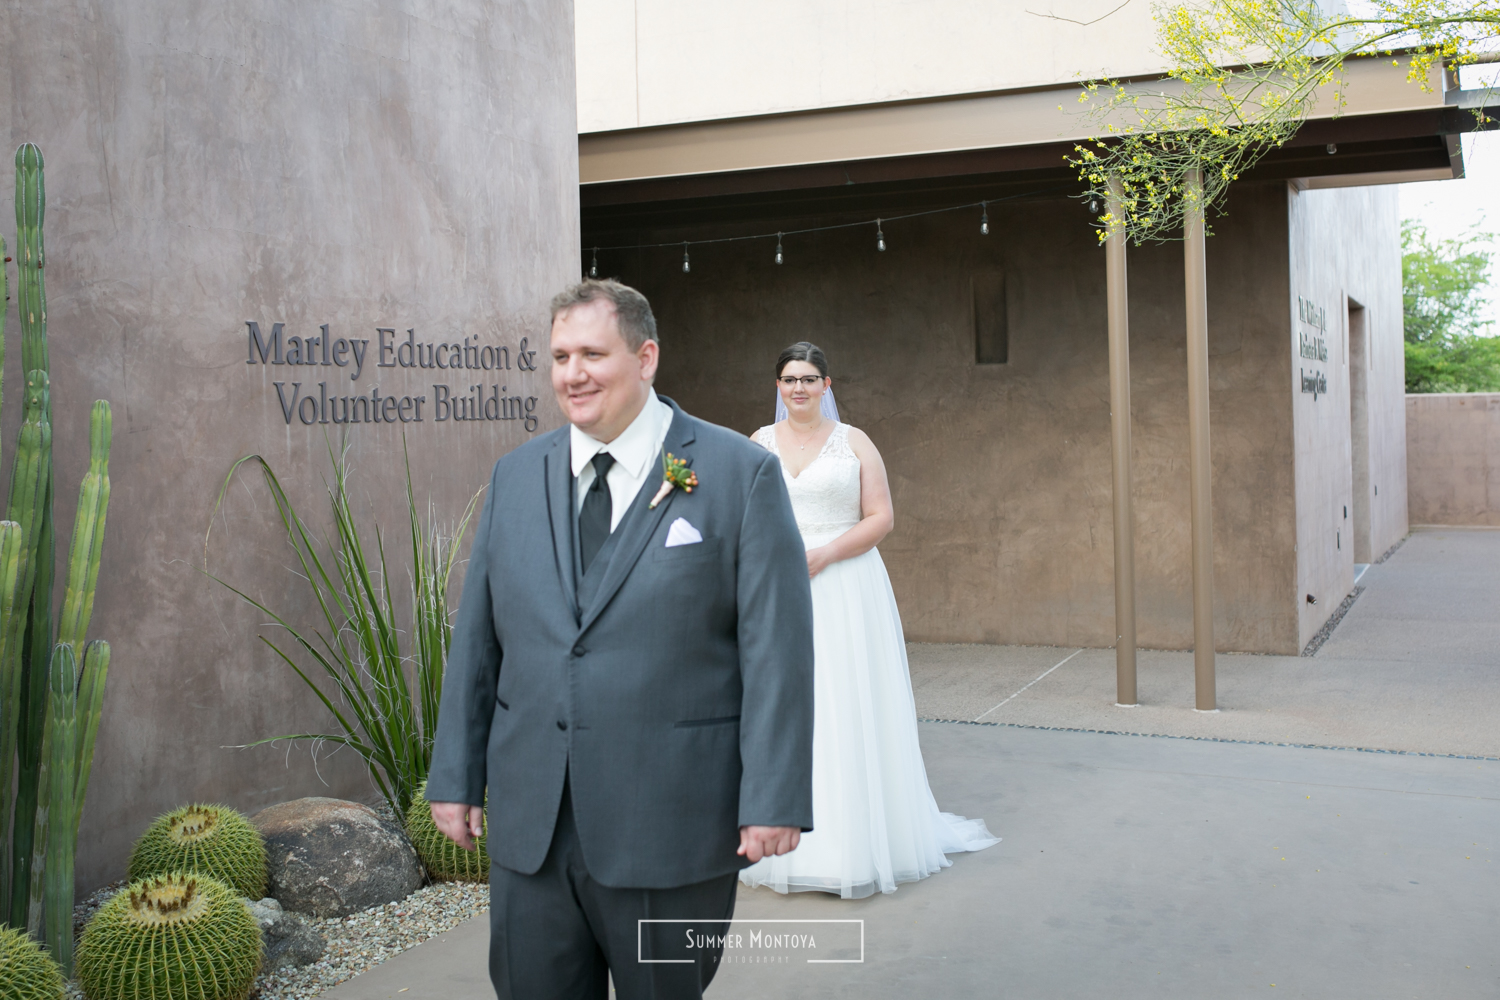  Phoenix wedding at the Desert Botanical Gardens 